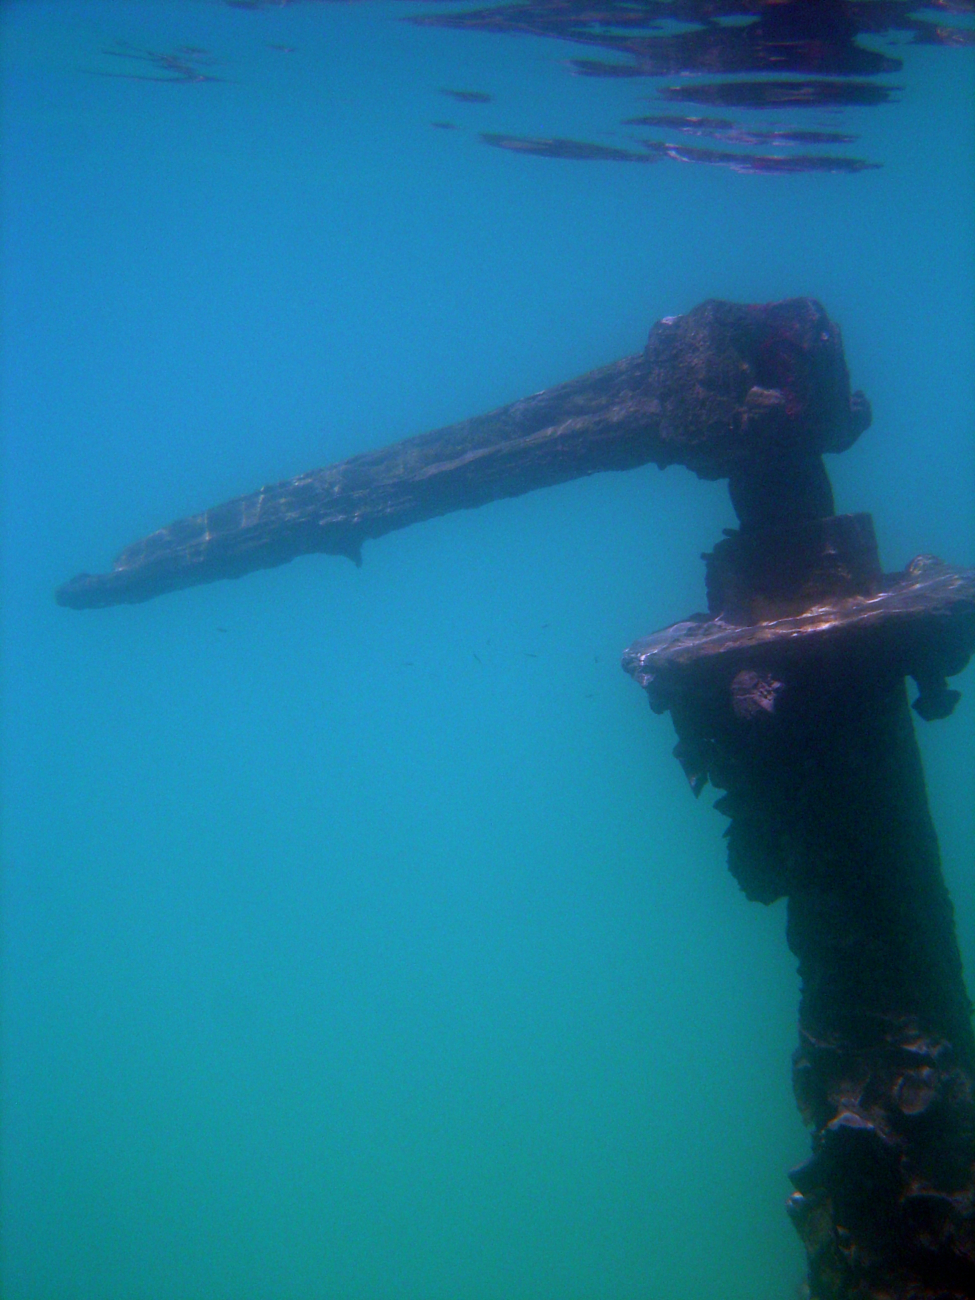 Valve on shipwreck in marine lake at Palau